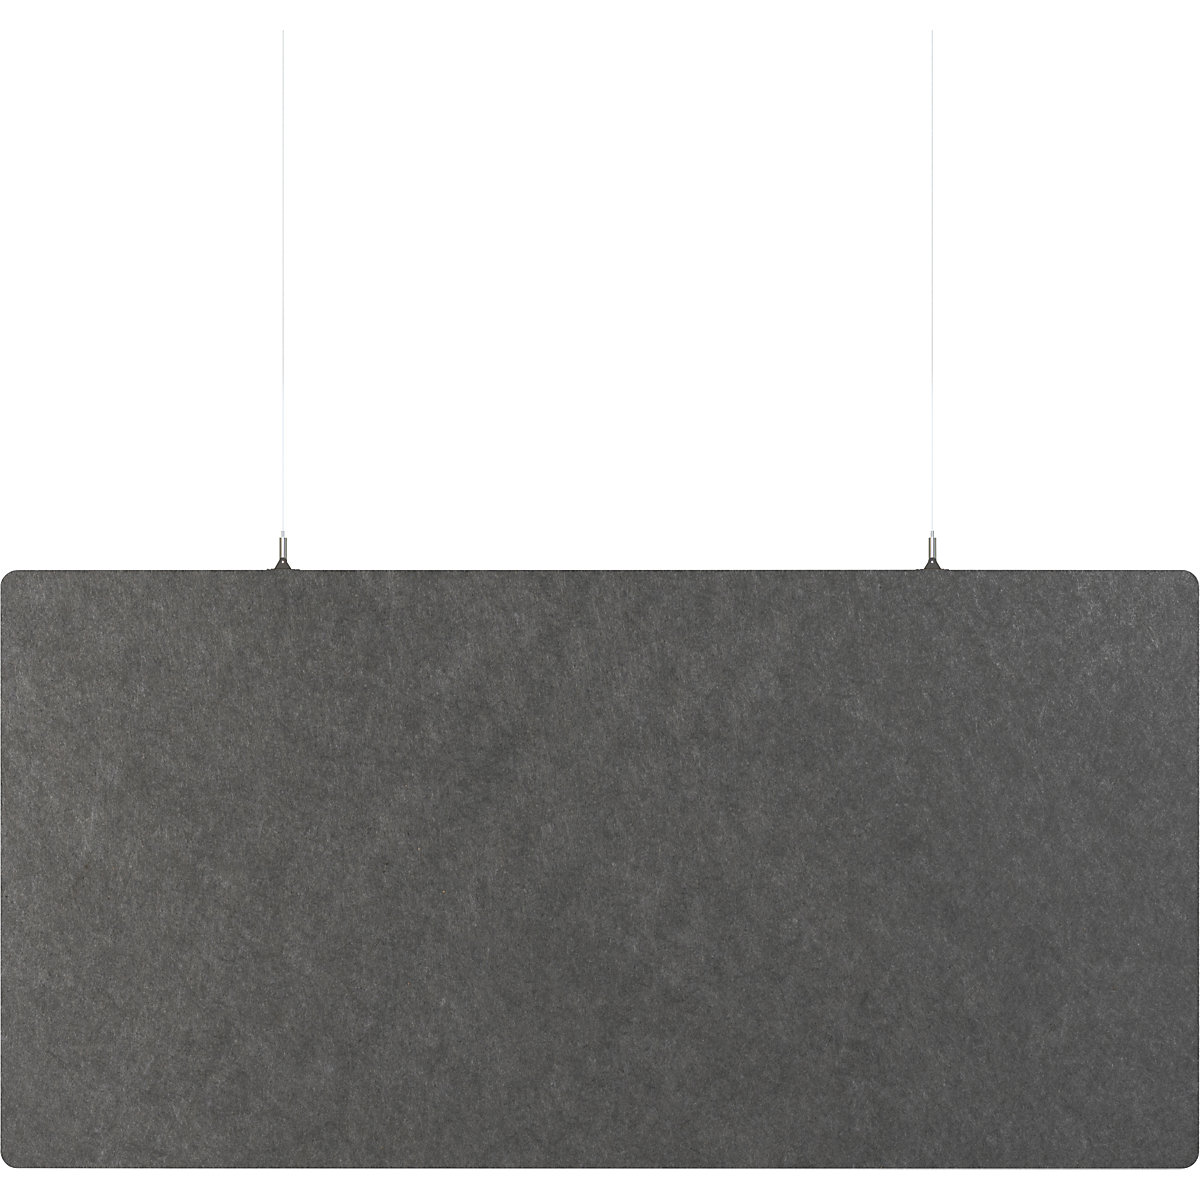 EUROKRAFTbasic Akustik-Deckenplatte, PET-Filz, HxB 600 x 1200 mm, rechteckige Form, dunkelgrau, ab 5 Stk